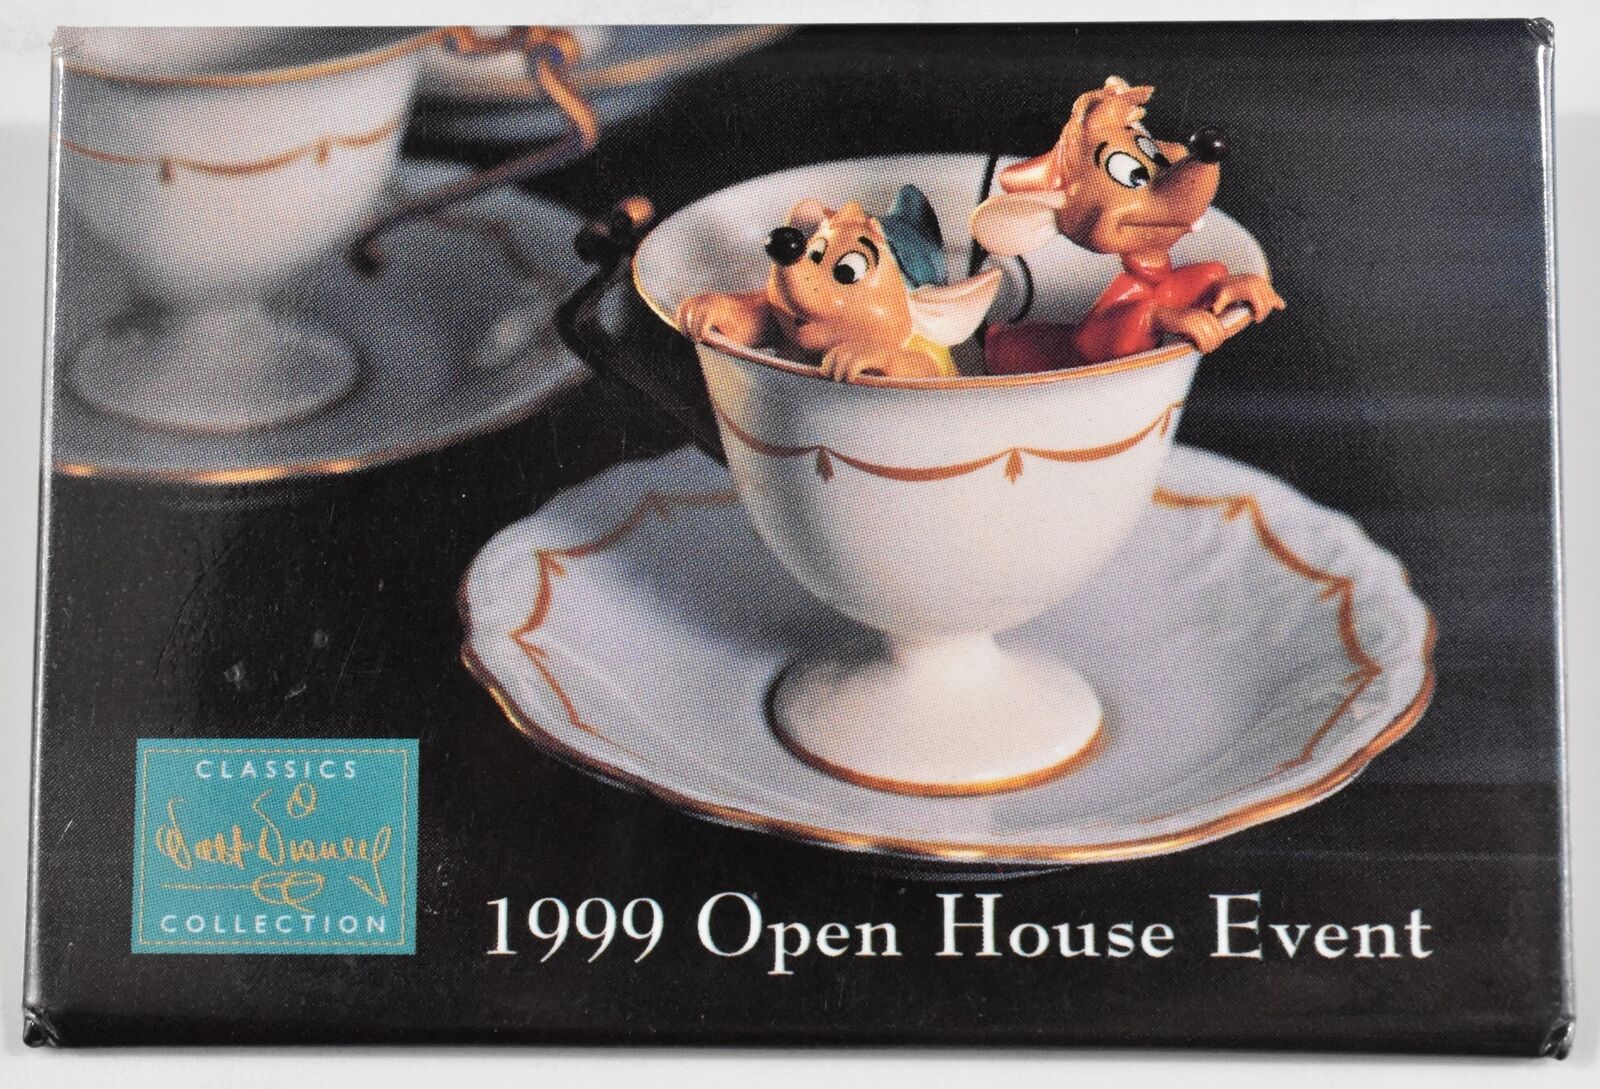 Vtg 1999 Walt Disney Classics Collection Open House Event Promotional Pinback